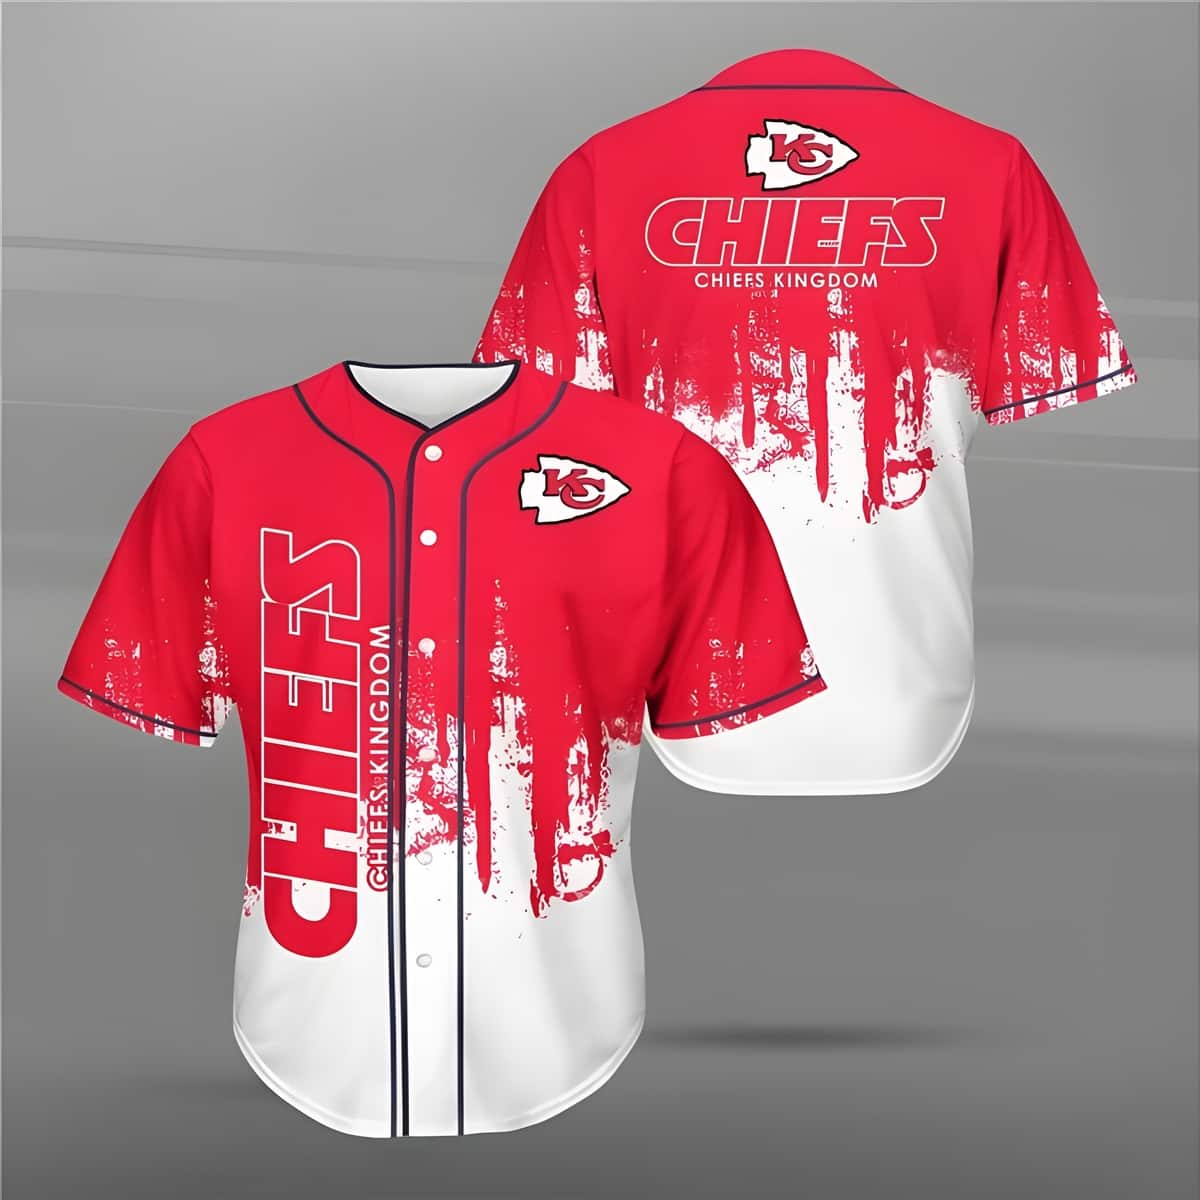 NFL Kansas City Chiefs Kingdom Baseball Jersey